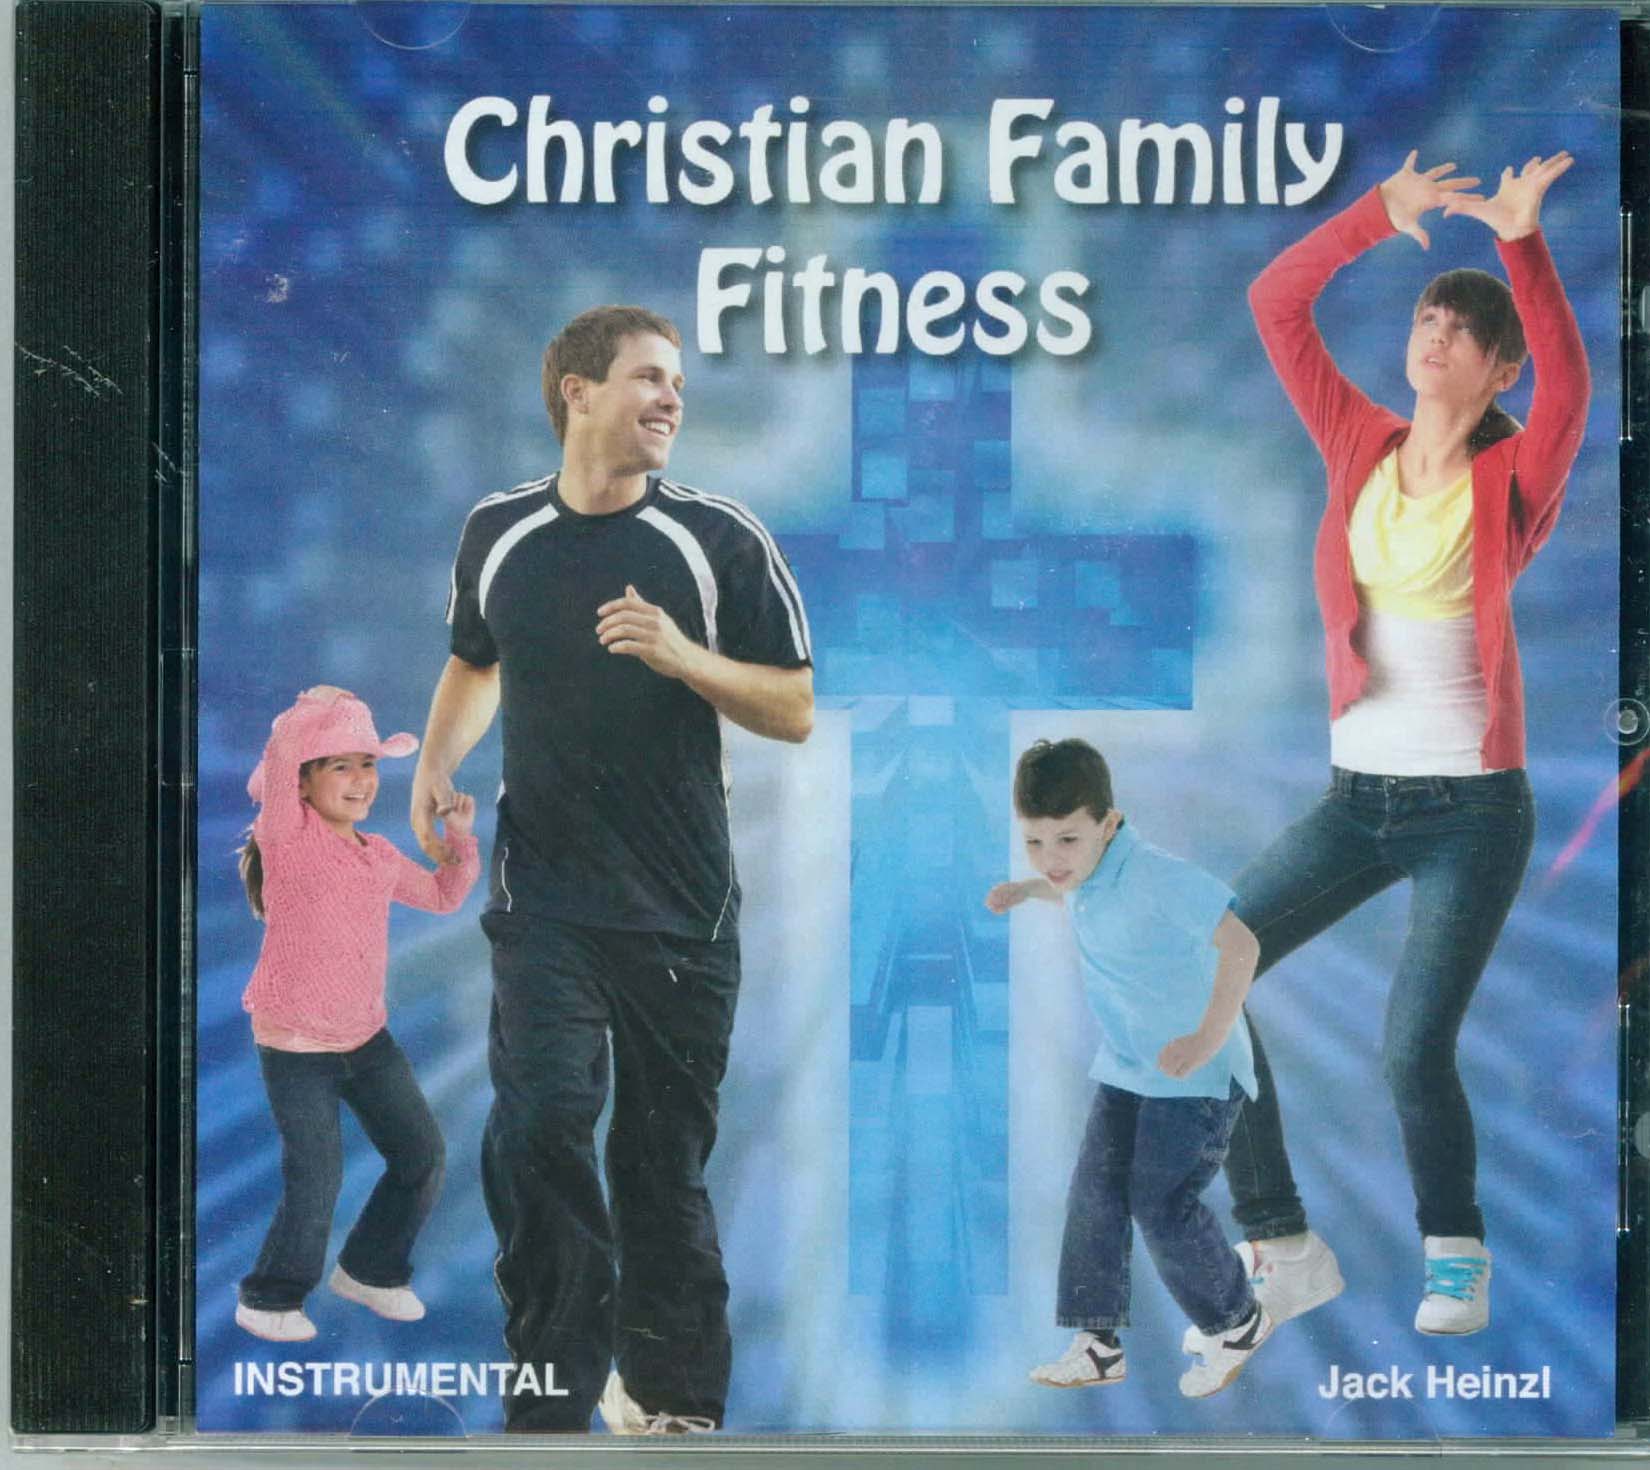 Christian Family Fitness - CD by Jack Heinzl 285-JHZ-7499